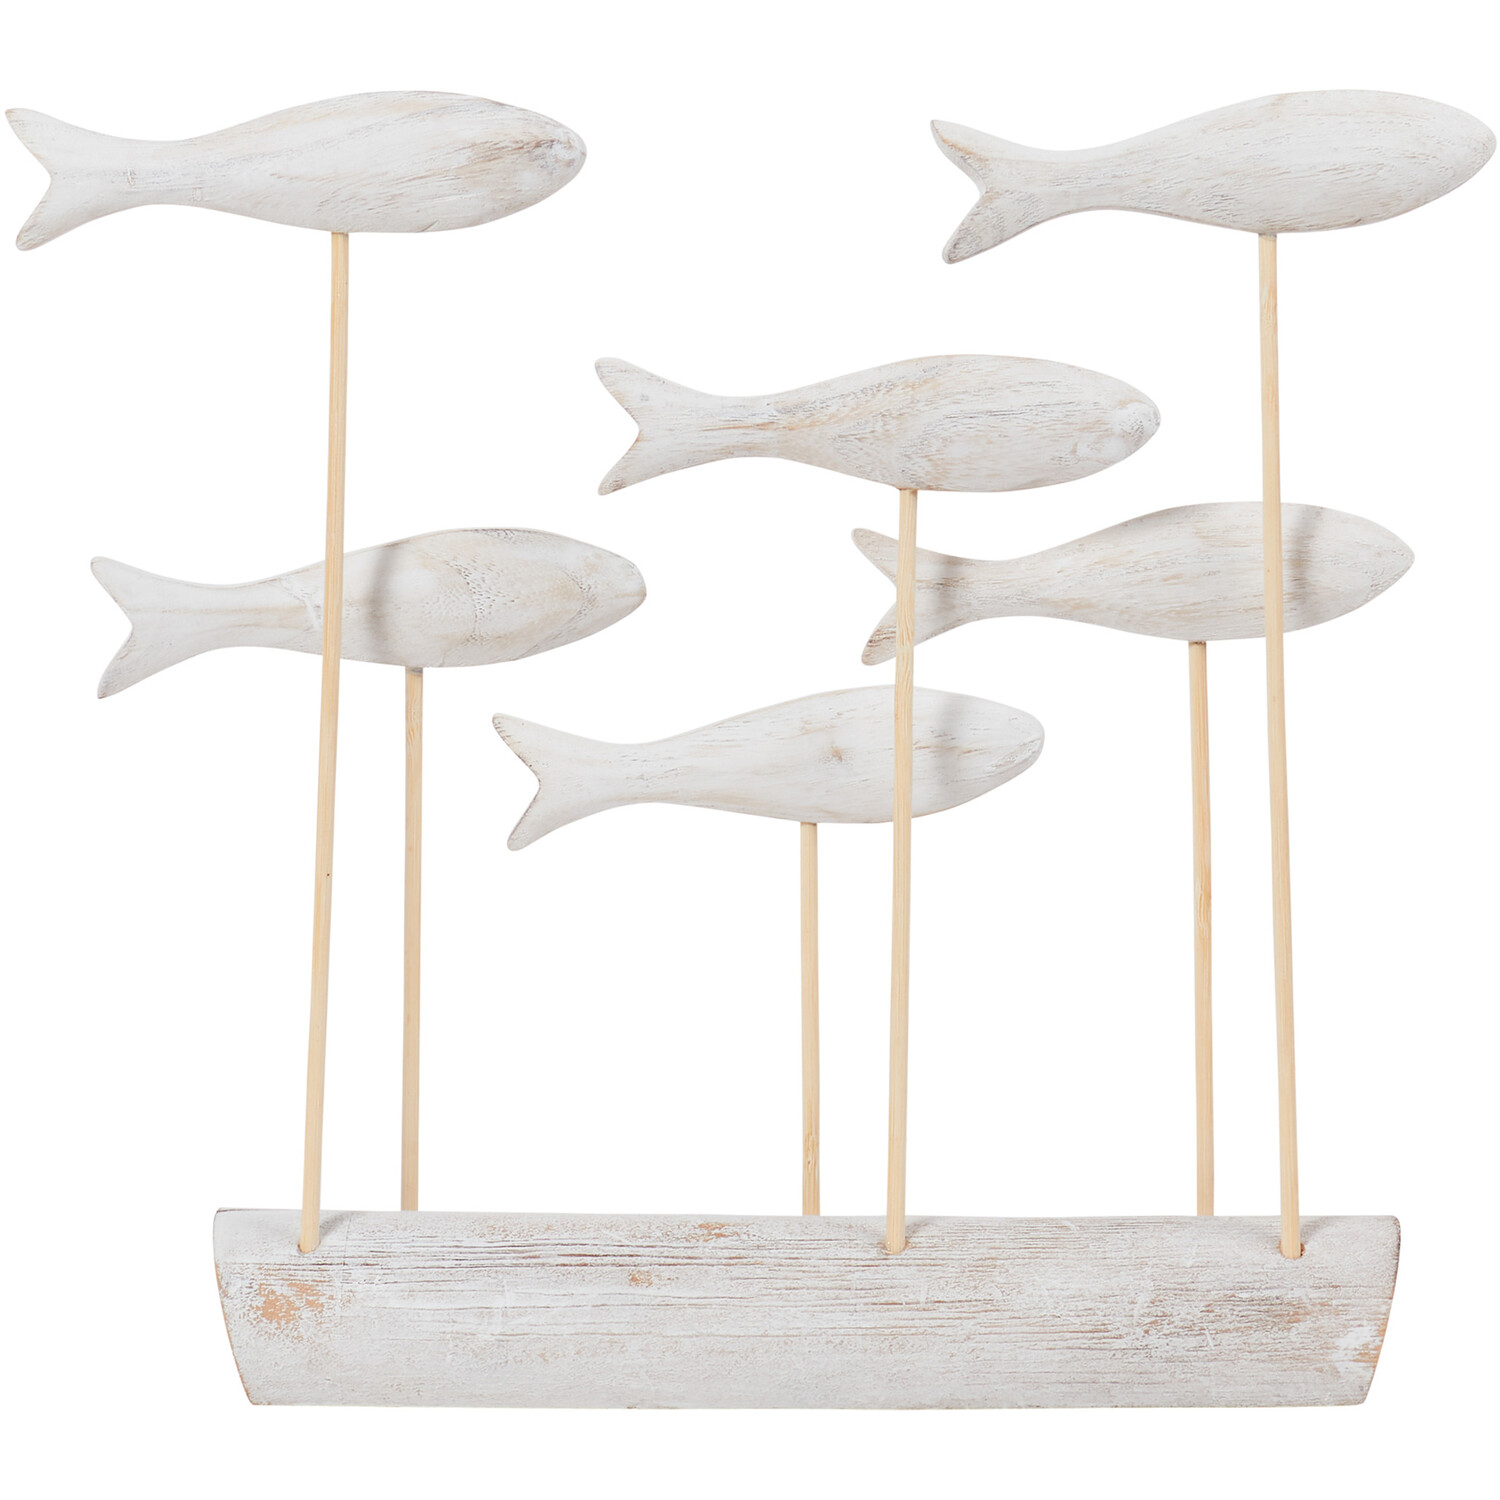 Floating Fish Ornament - White Image 1